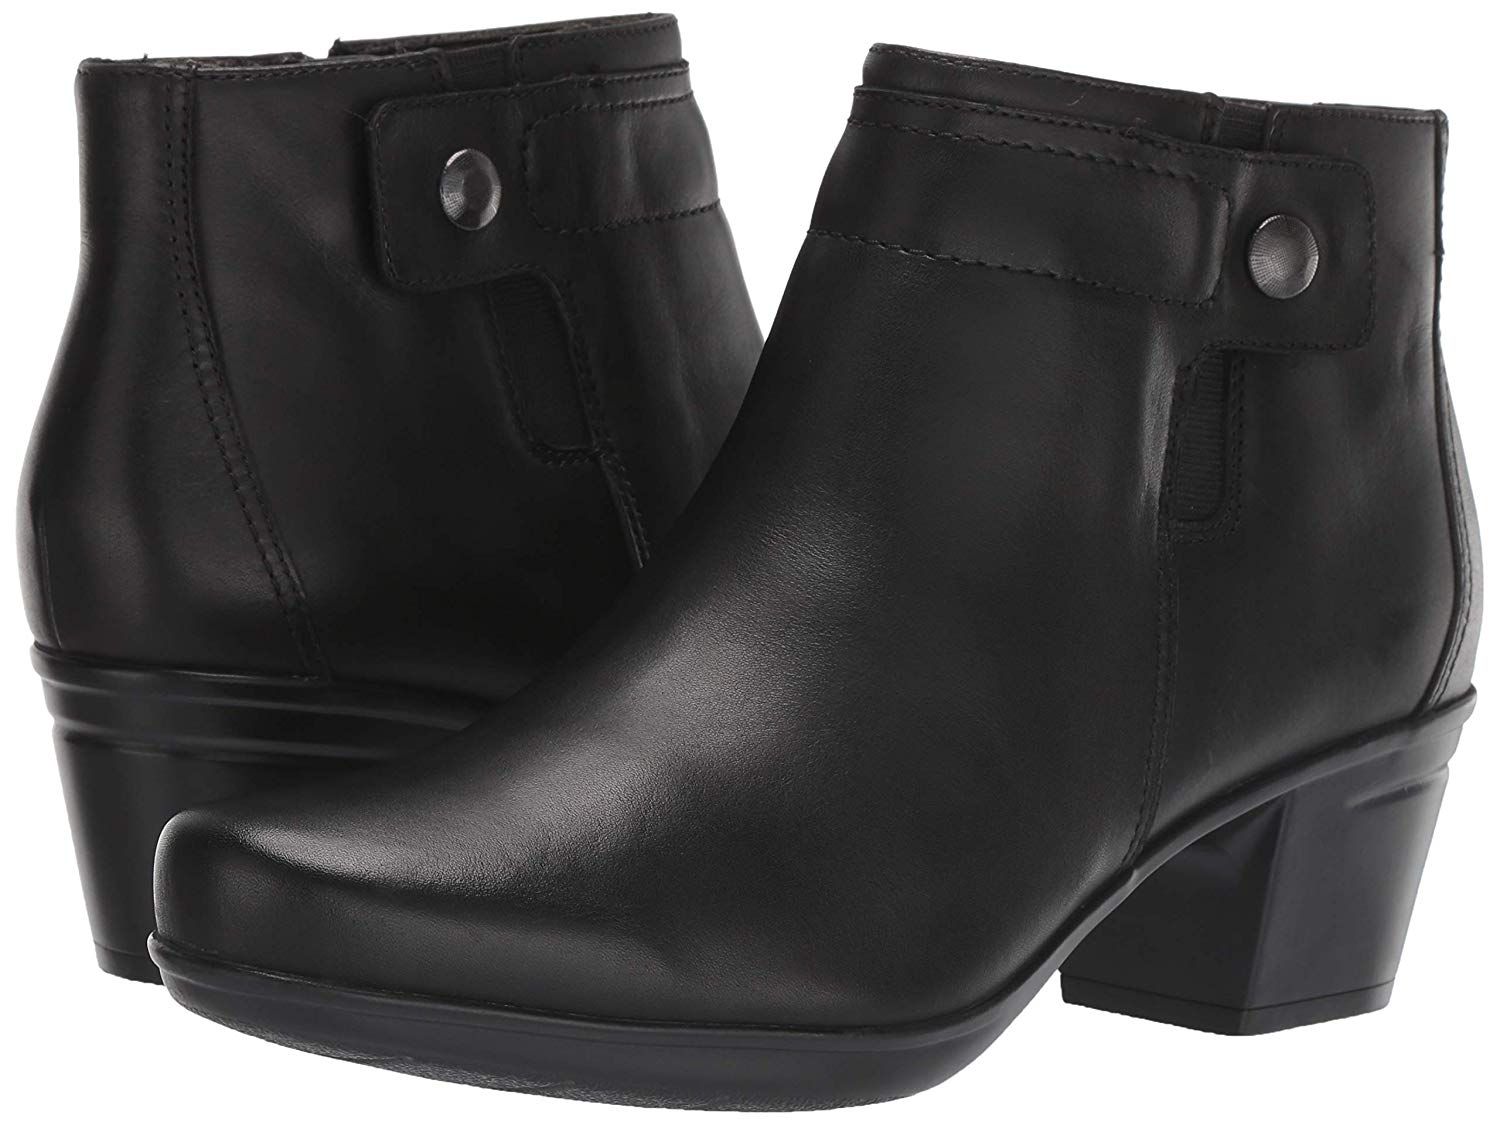 CLARKS Women's Emslie Jada Ankle Boot, Black Leather, Size 6.5 o2gA ...